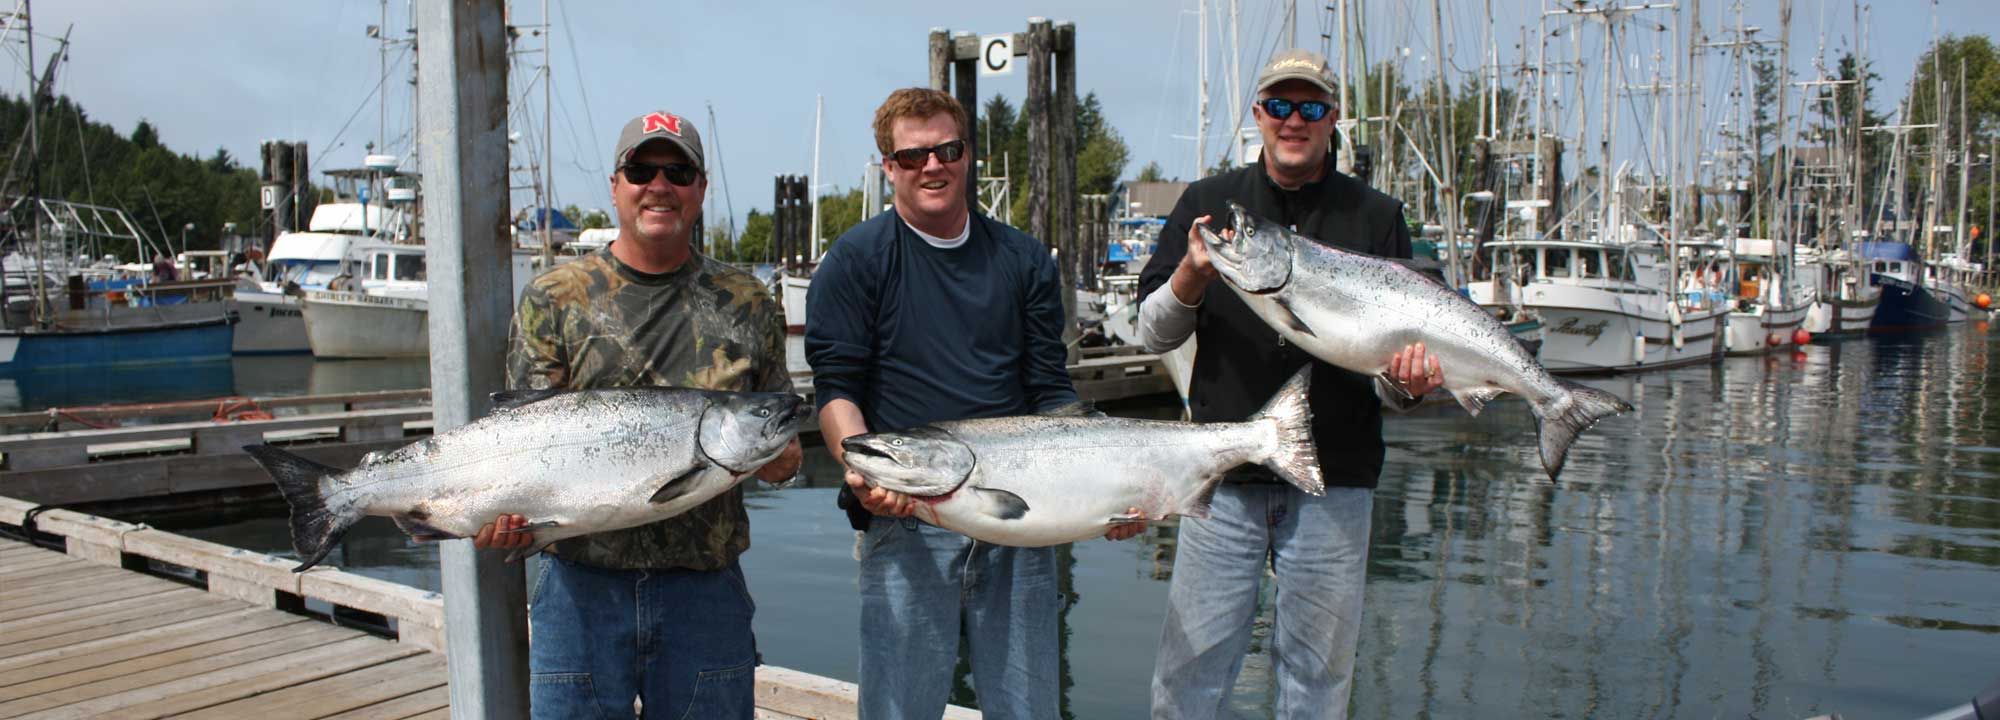 Salmon Eye Charters - How to Catch Twice as Many Salmon